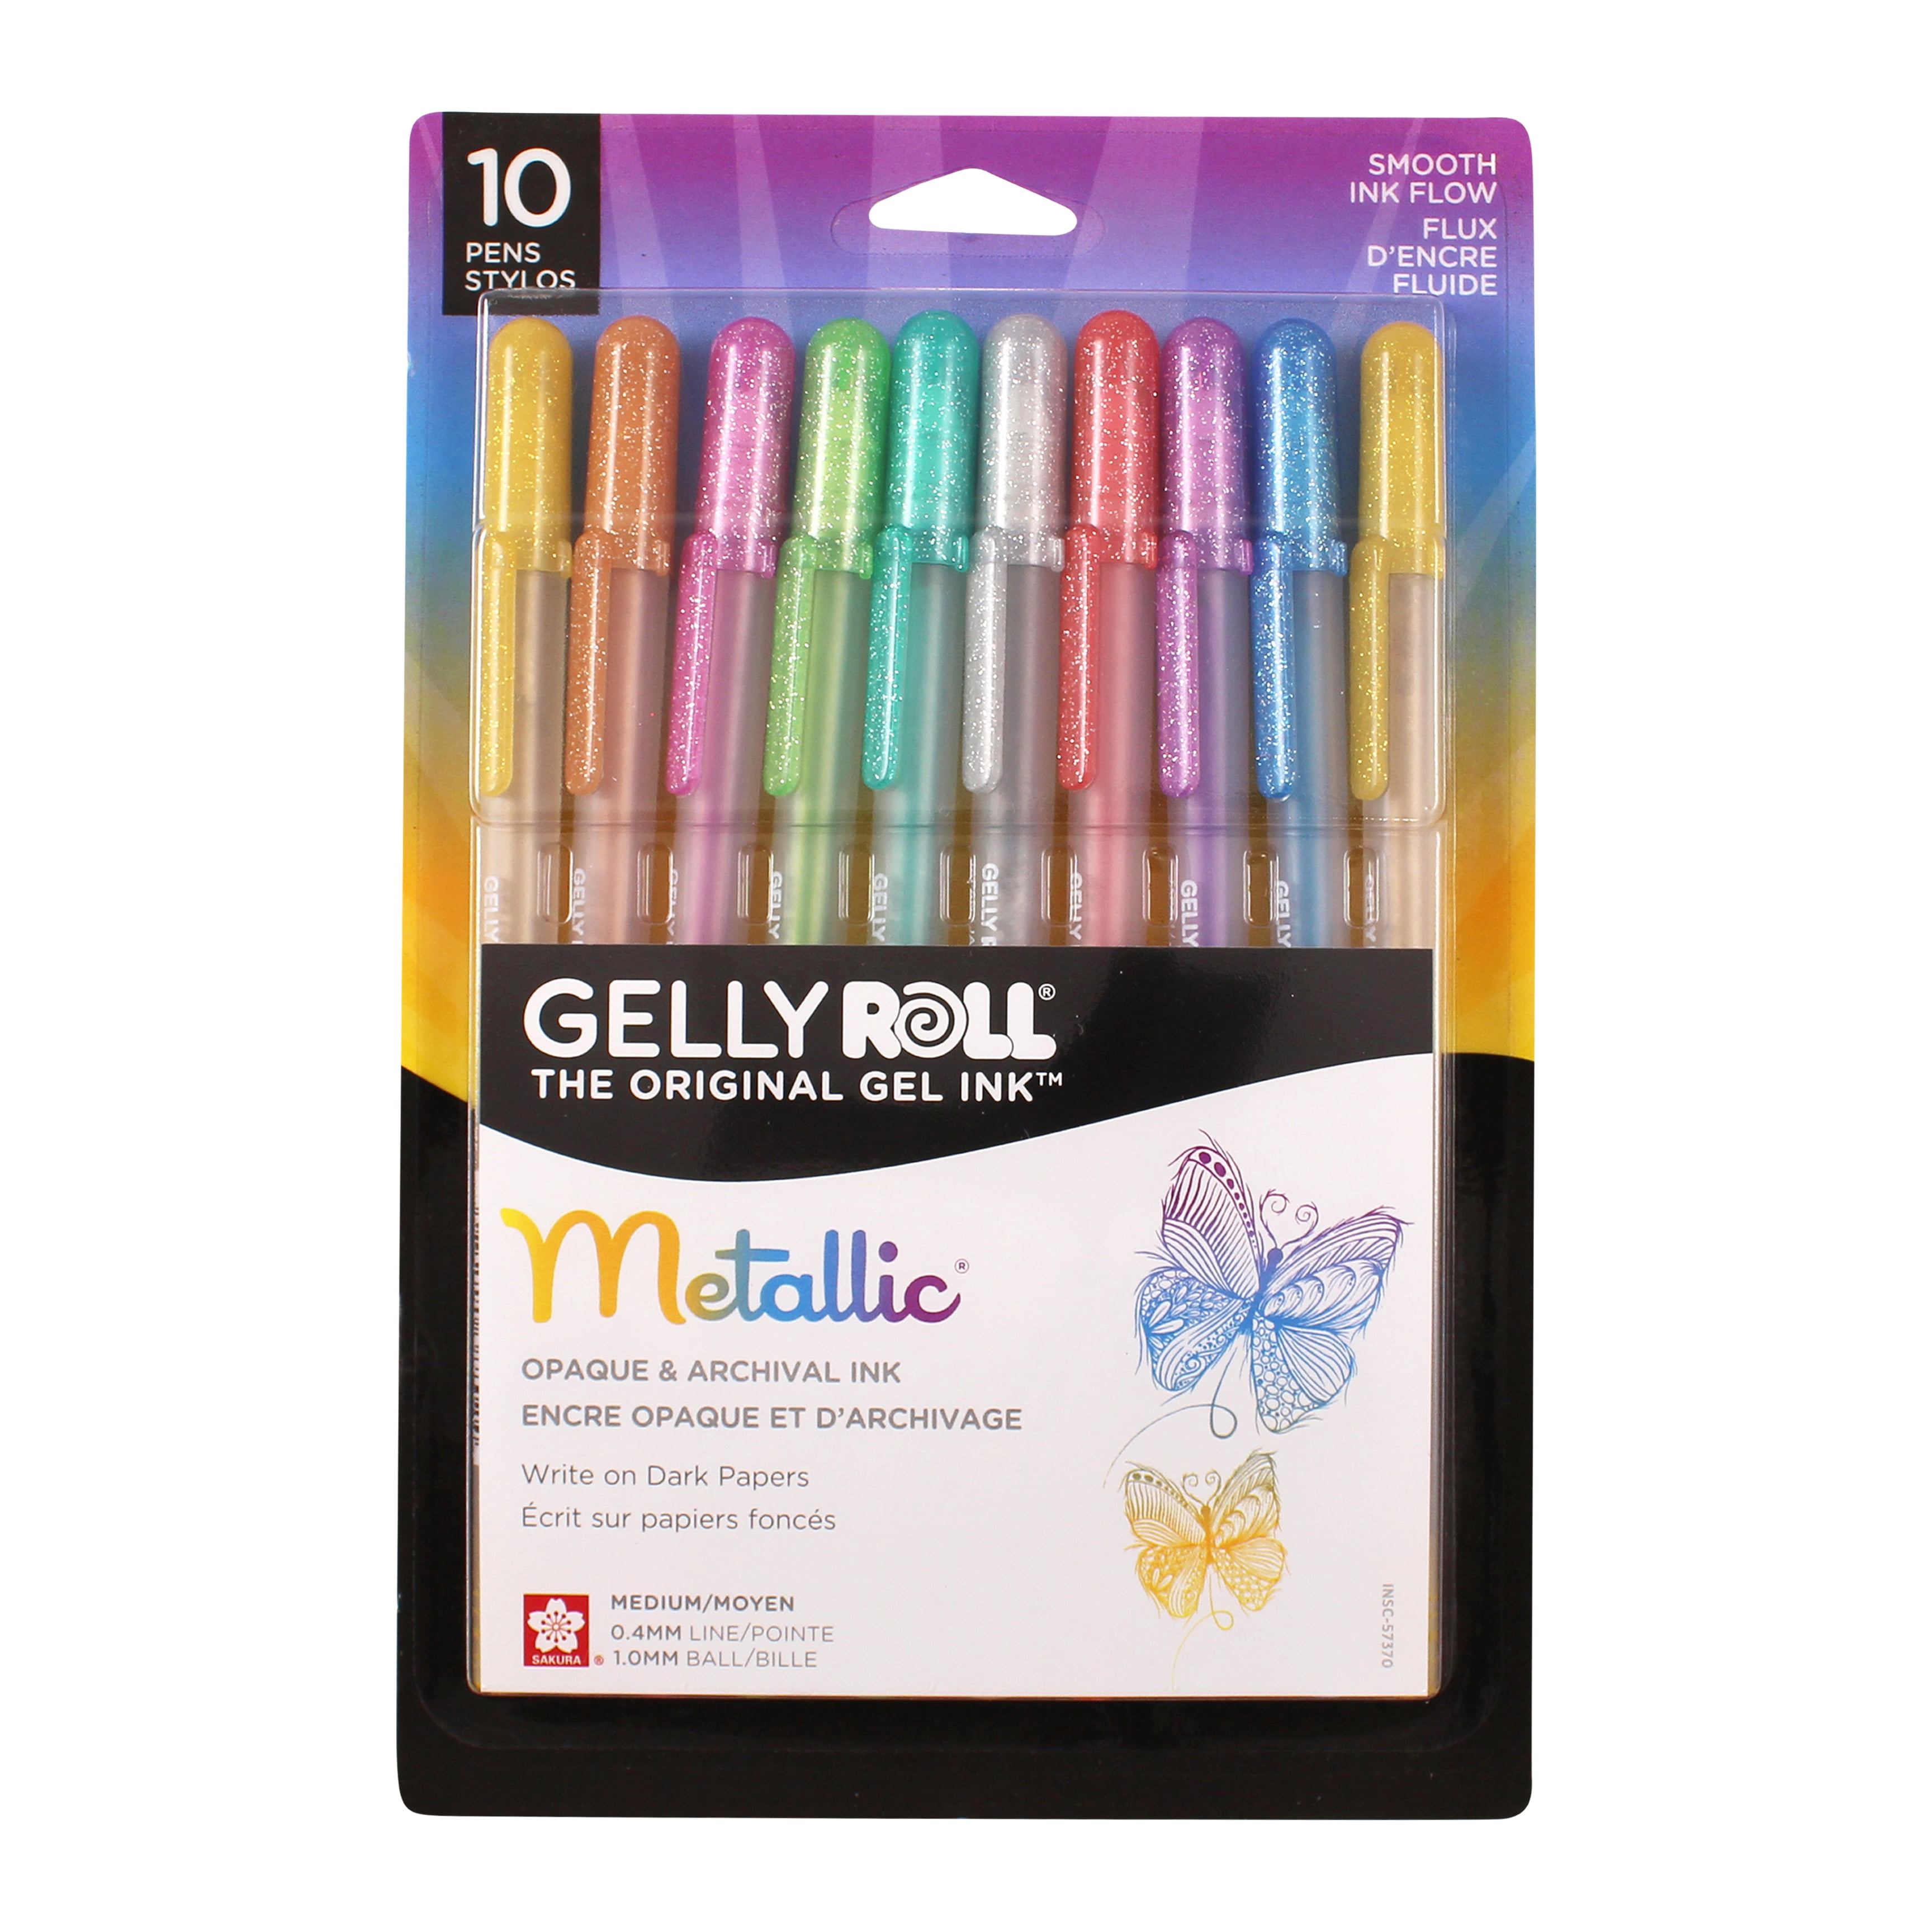 Glitter Gel Pens, Set of 12 Professional Artist Quality Pens, Best